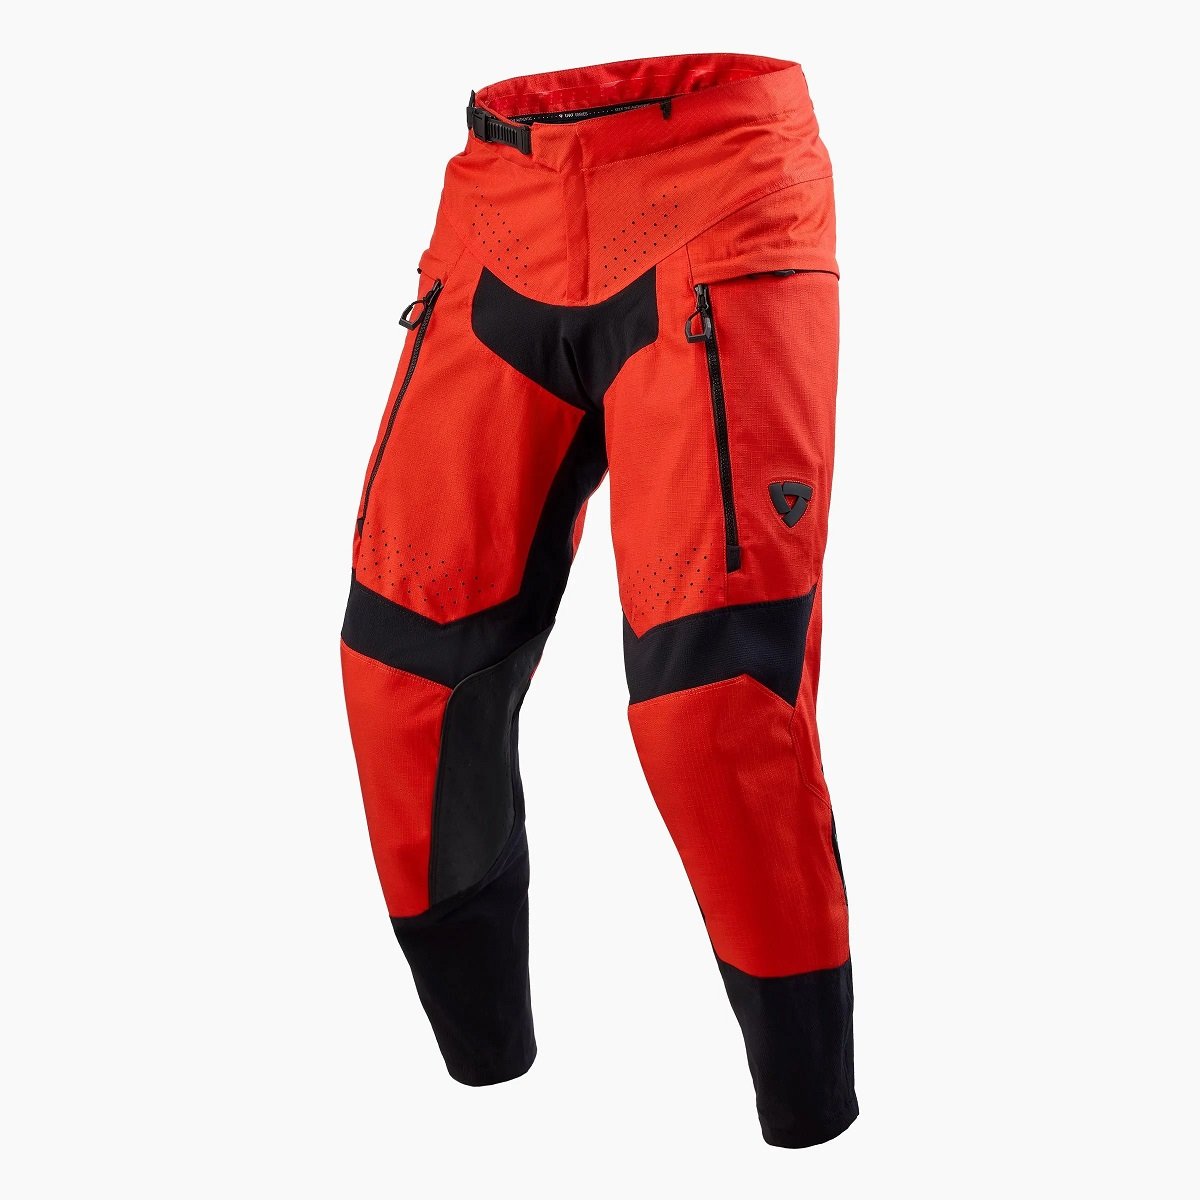 Image of REV'IT! Peninsula Trousers Red Motorcycle Pants Size S EN